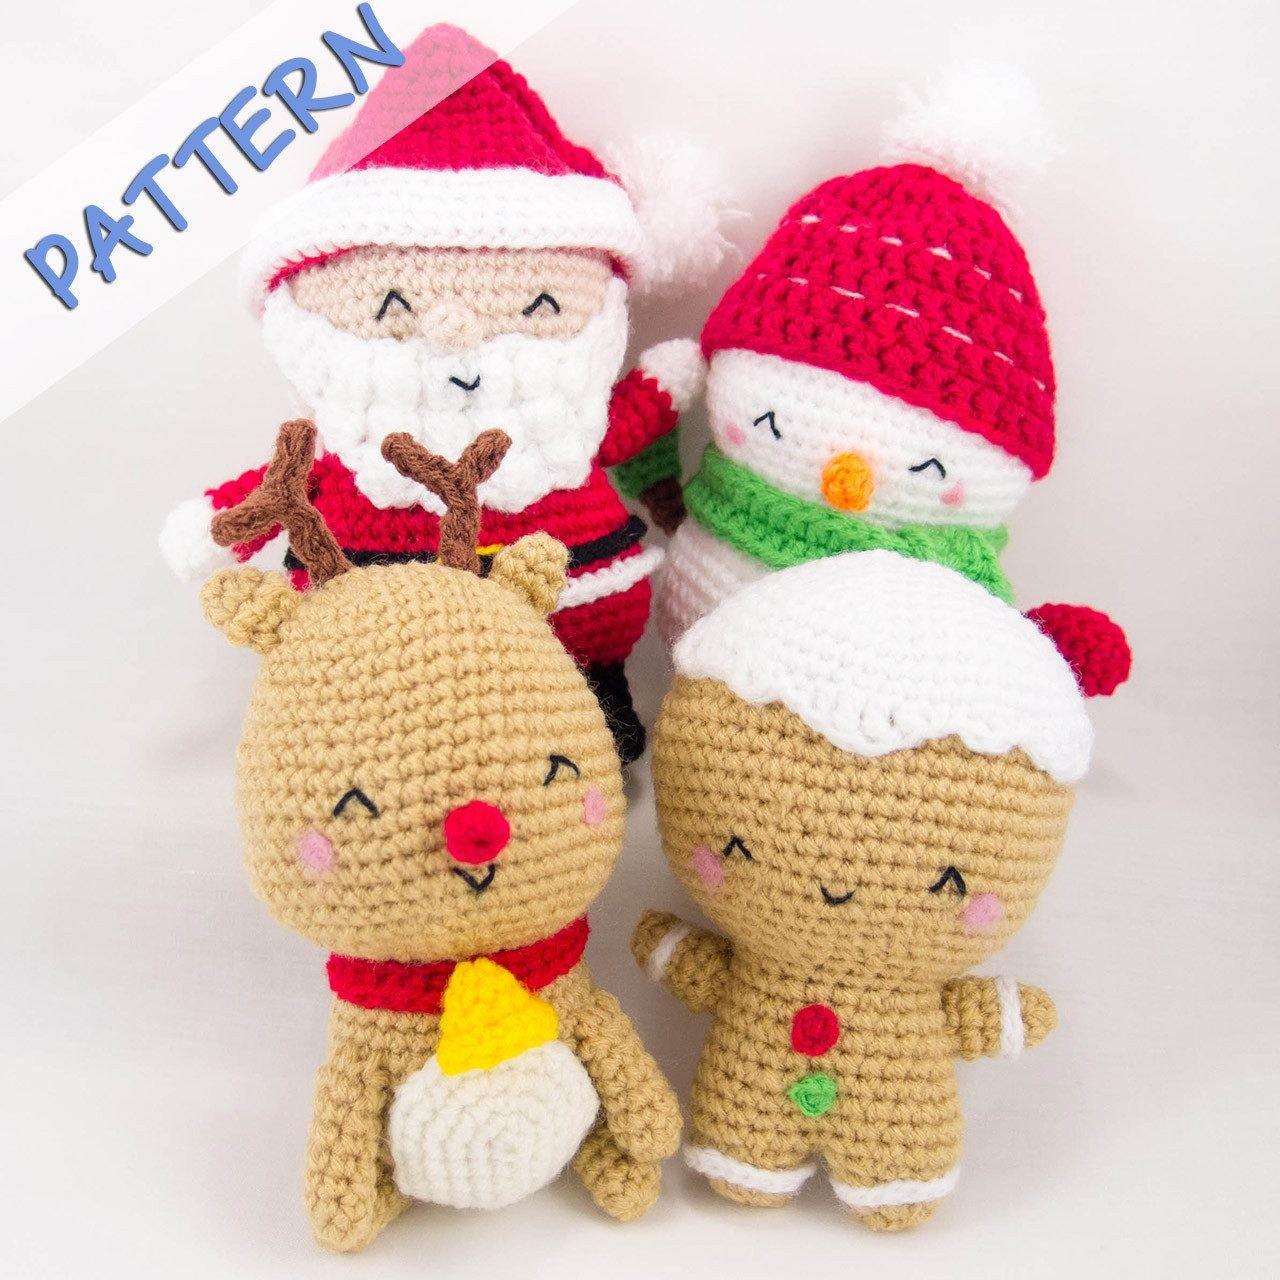 Christmas Crochet Amigurumi Patterns